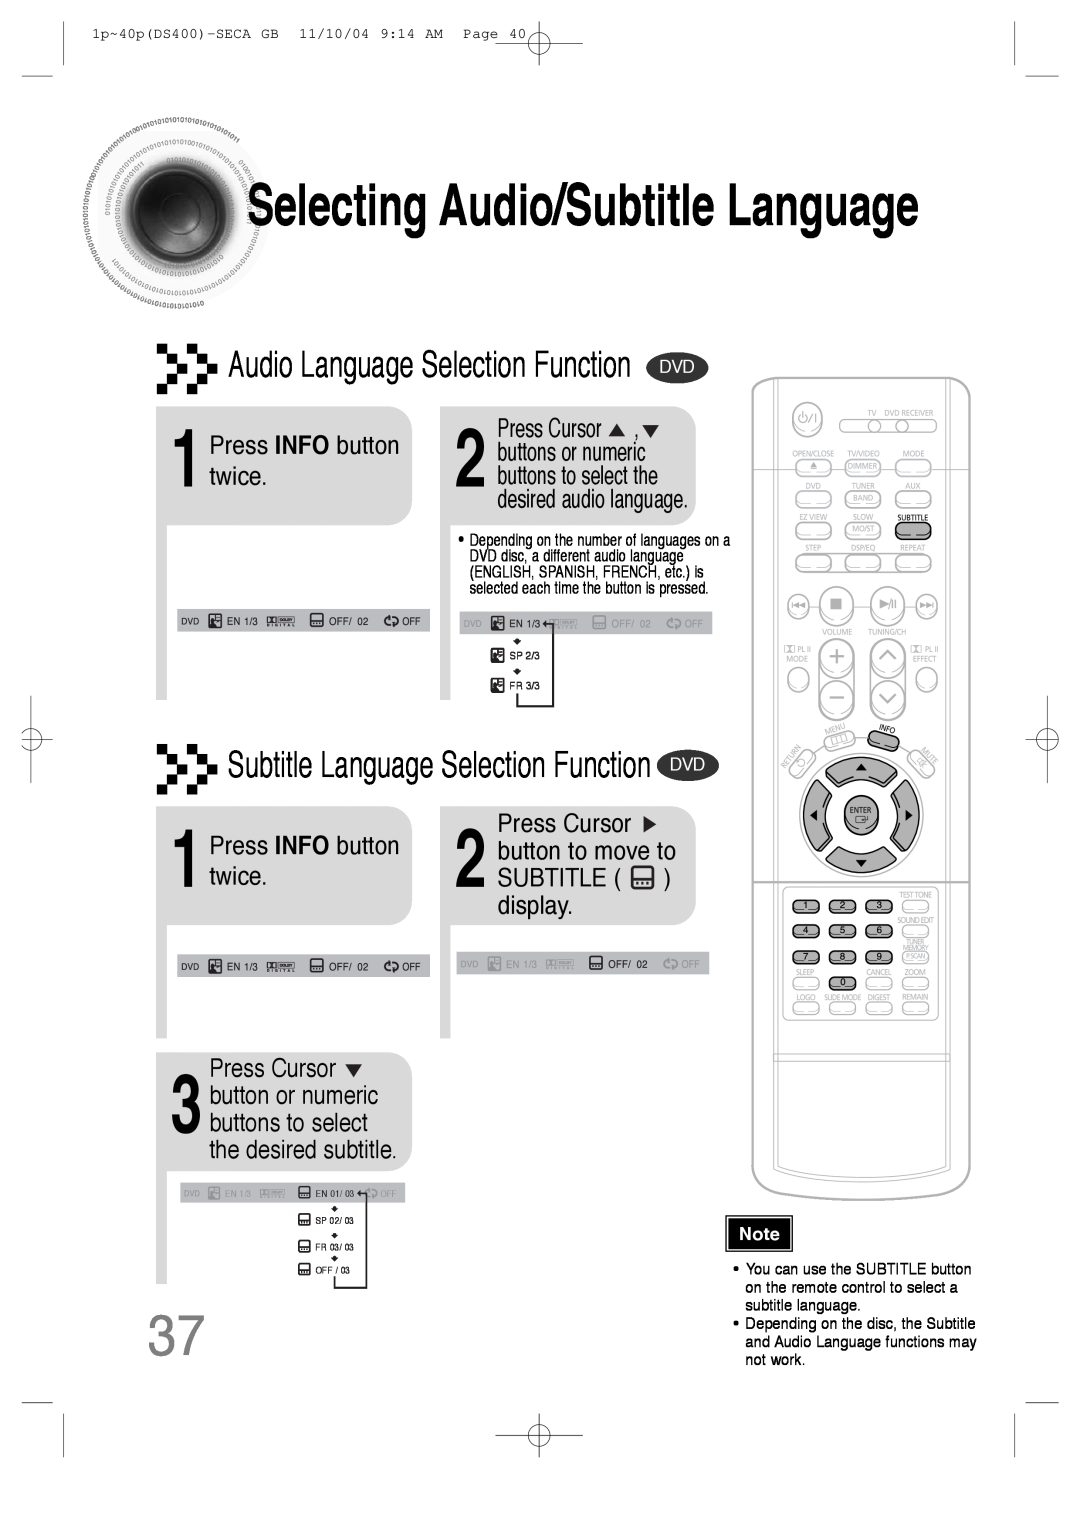 Samsung HT-DS400 Audio Language Selection Function DVD, 1Press INFO button twice, desired audio language, Press Cursor 